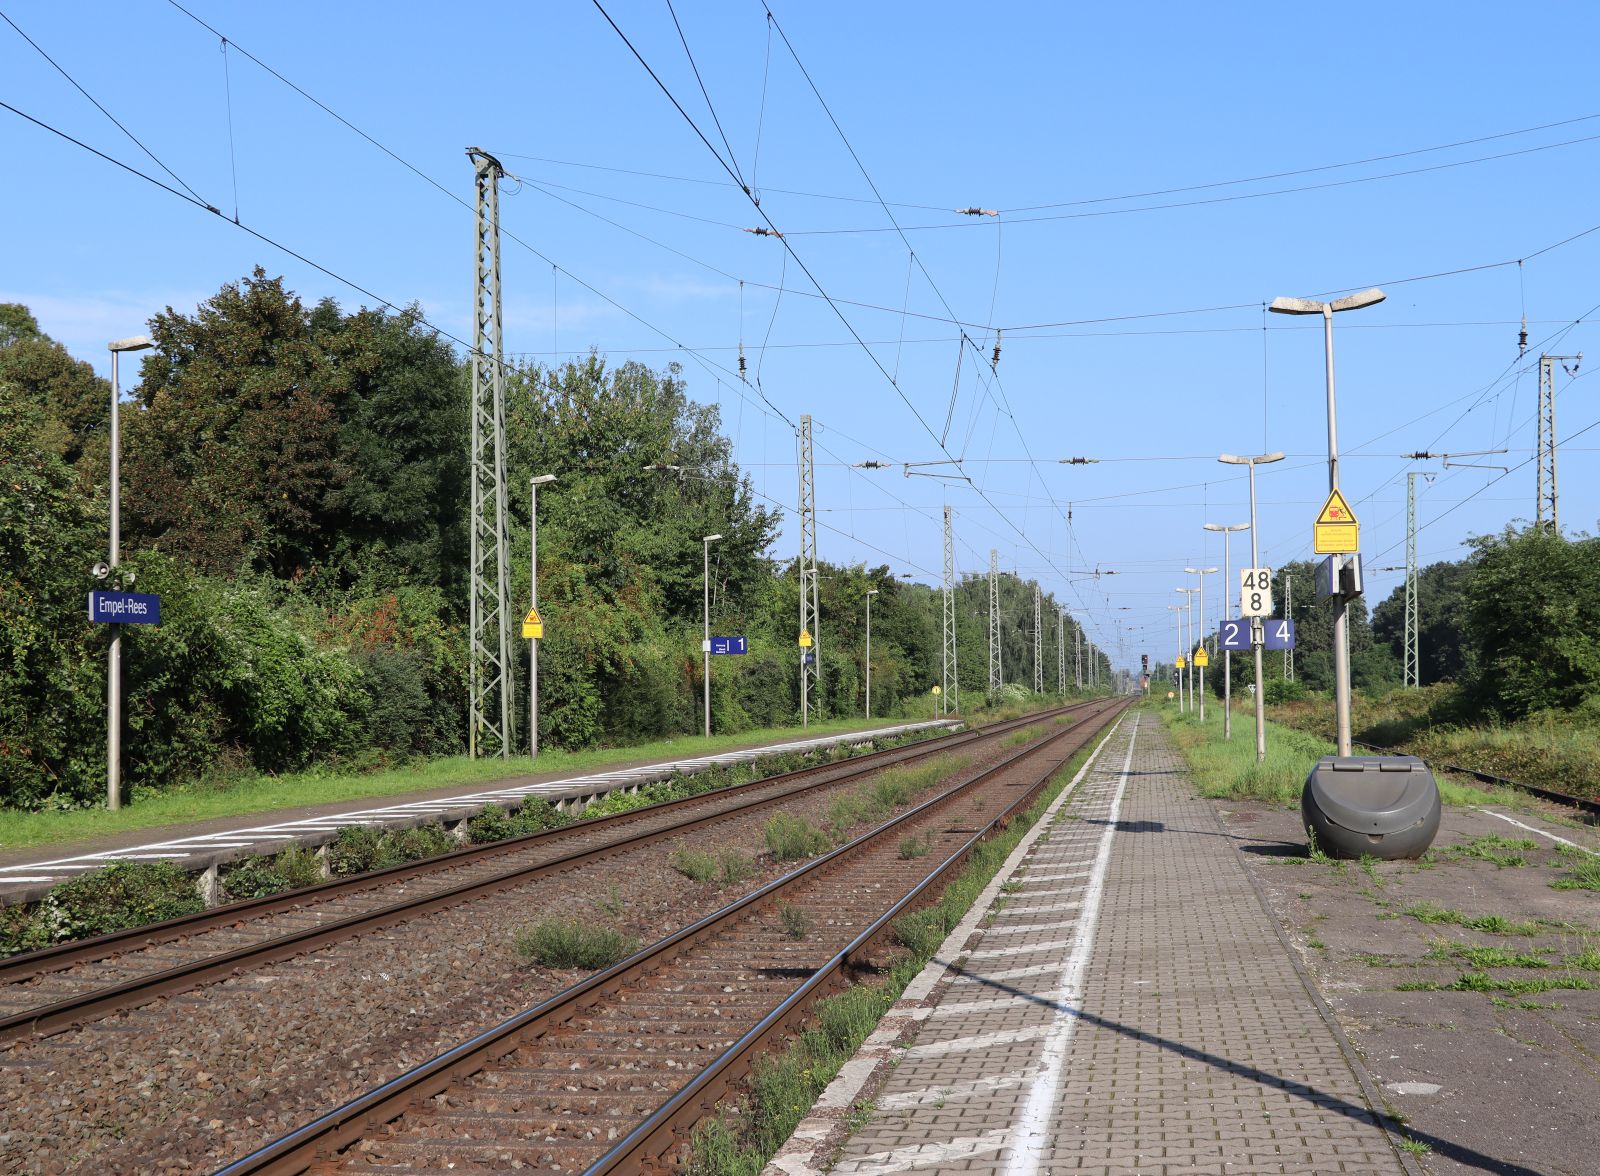 Bahnsteig Gleis 2 und 4 Bahnhof Empel-Rees 02-09-2021.

Perron spoor 2 en 4 station Empel-Rees 02-09-2021.